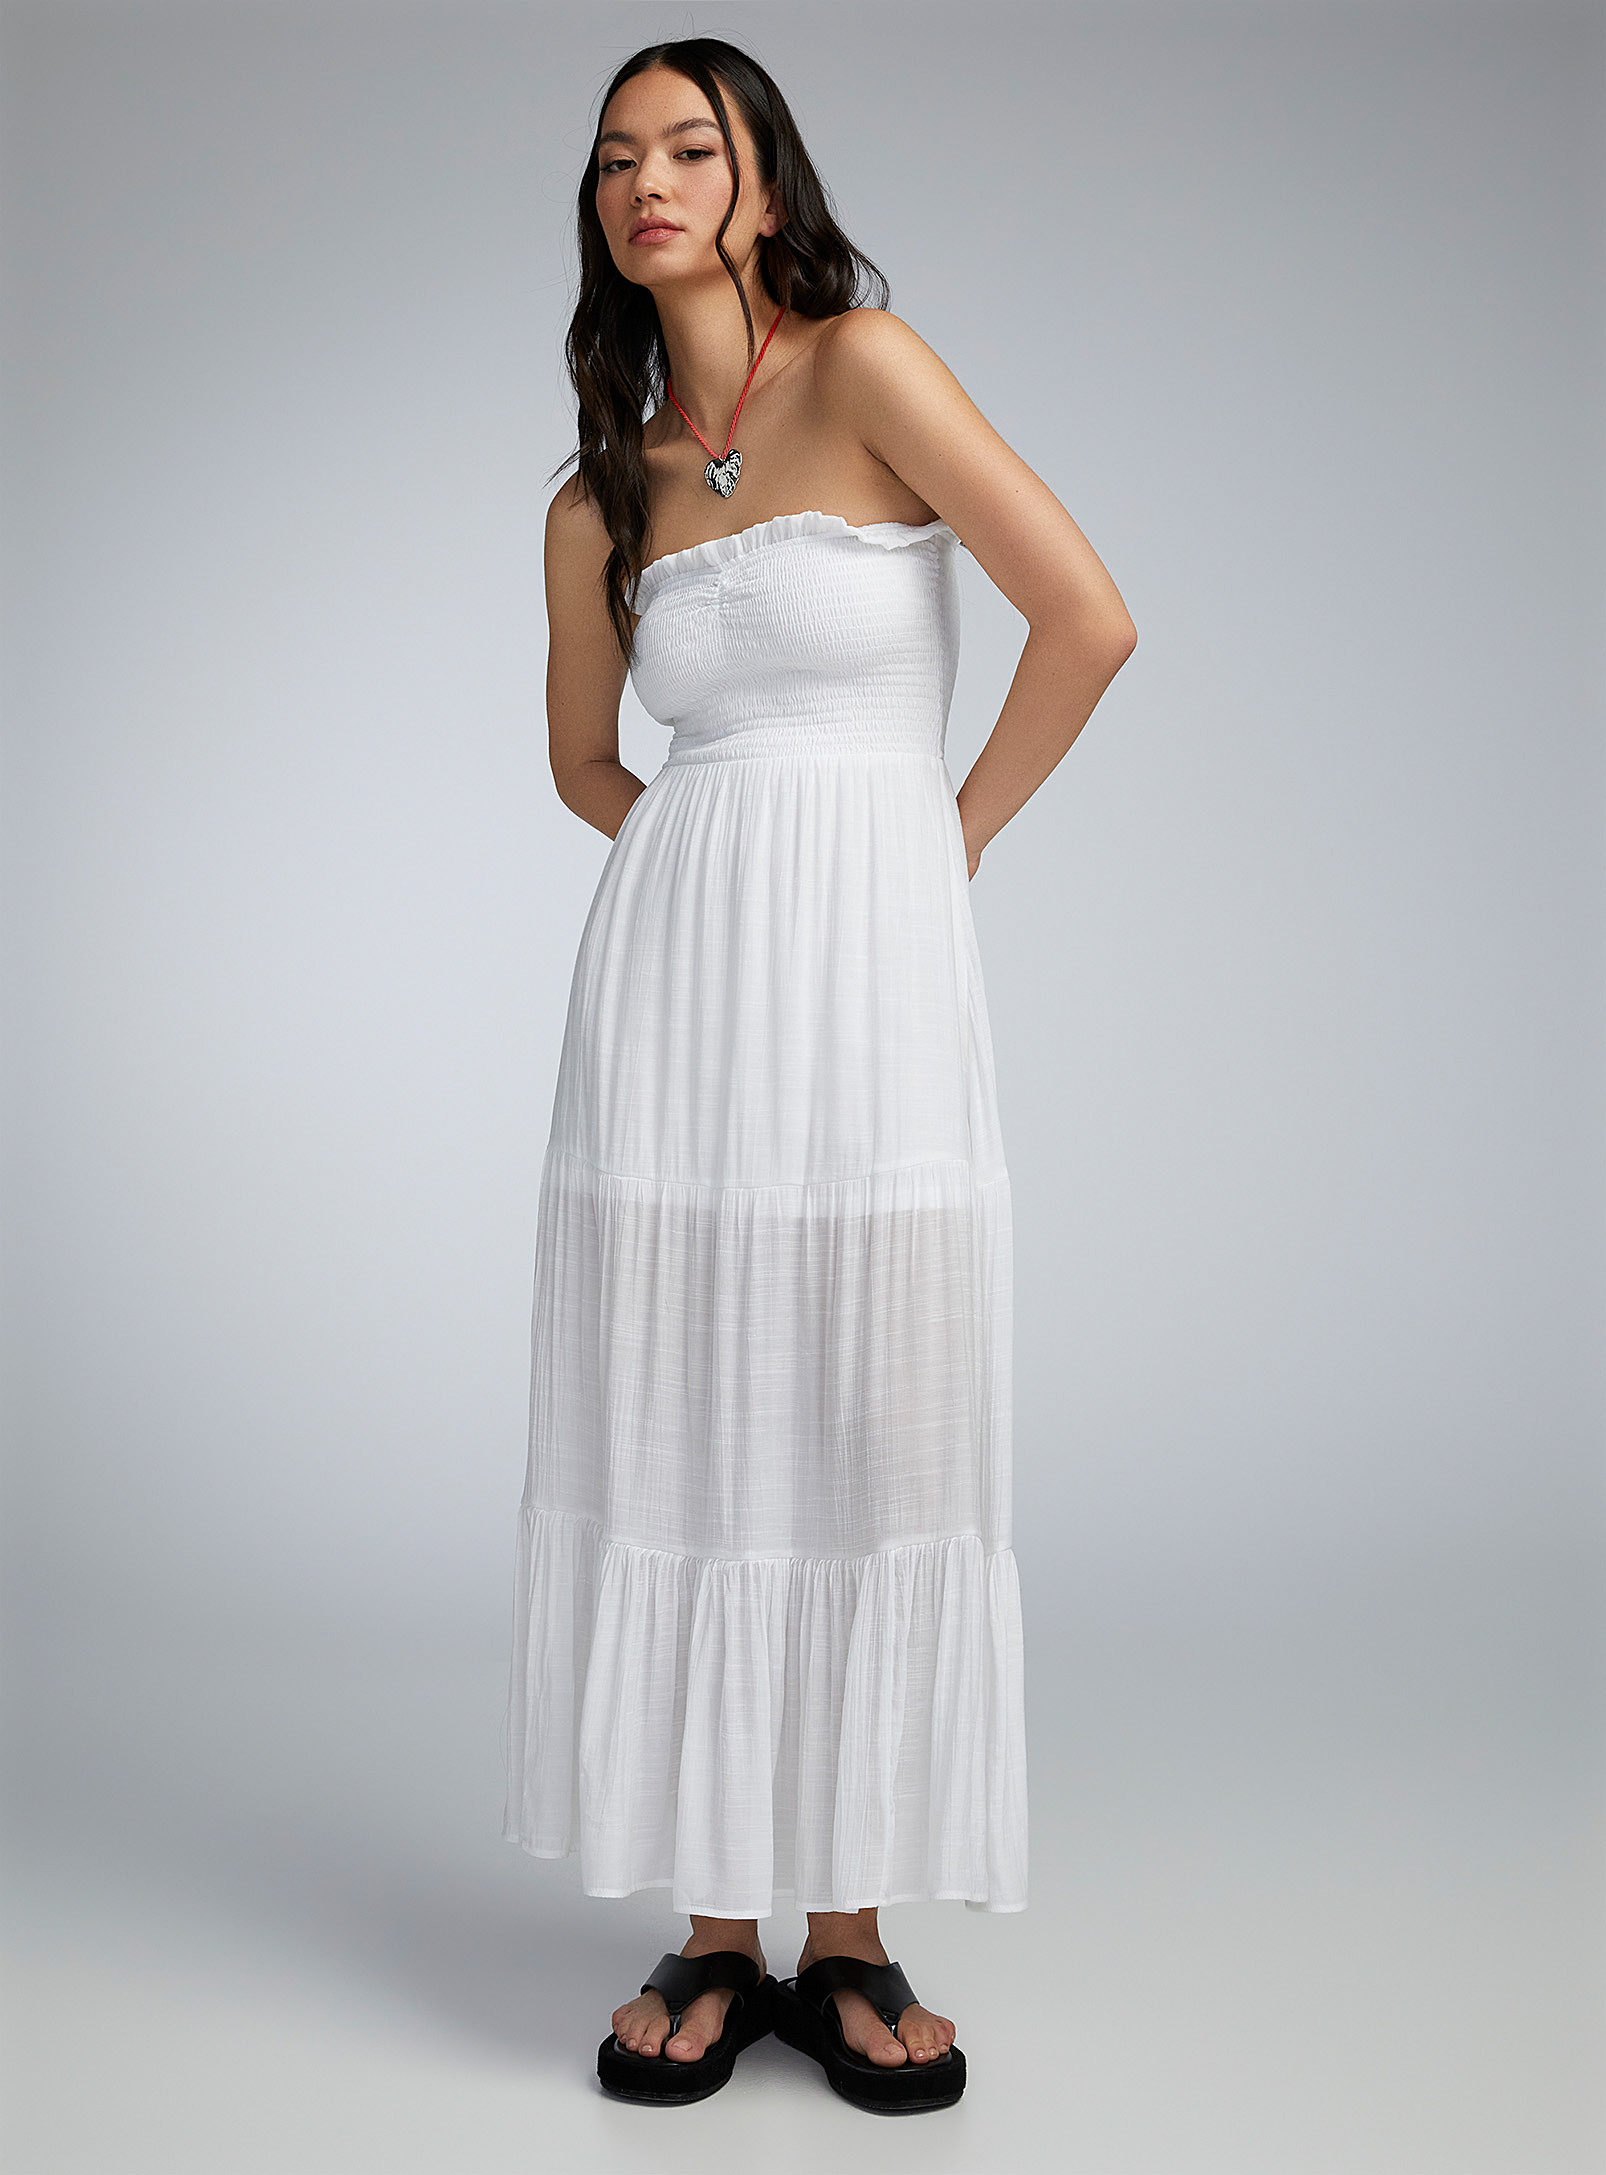 Twik Smocked Peasant Dress In White